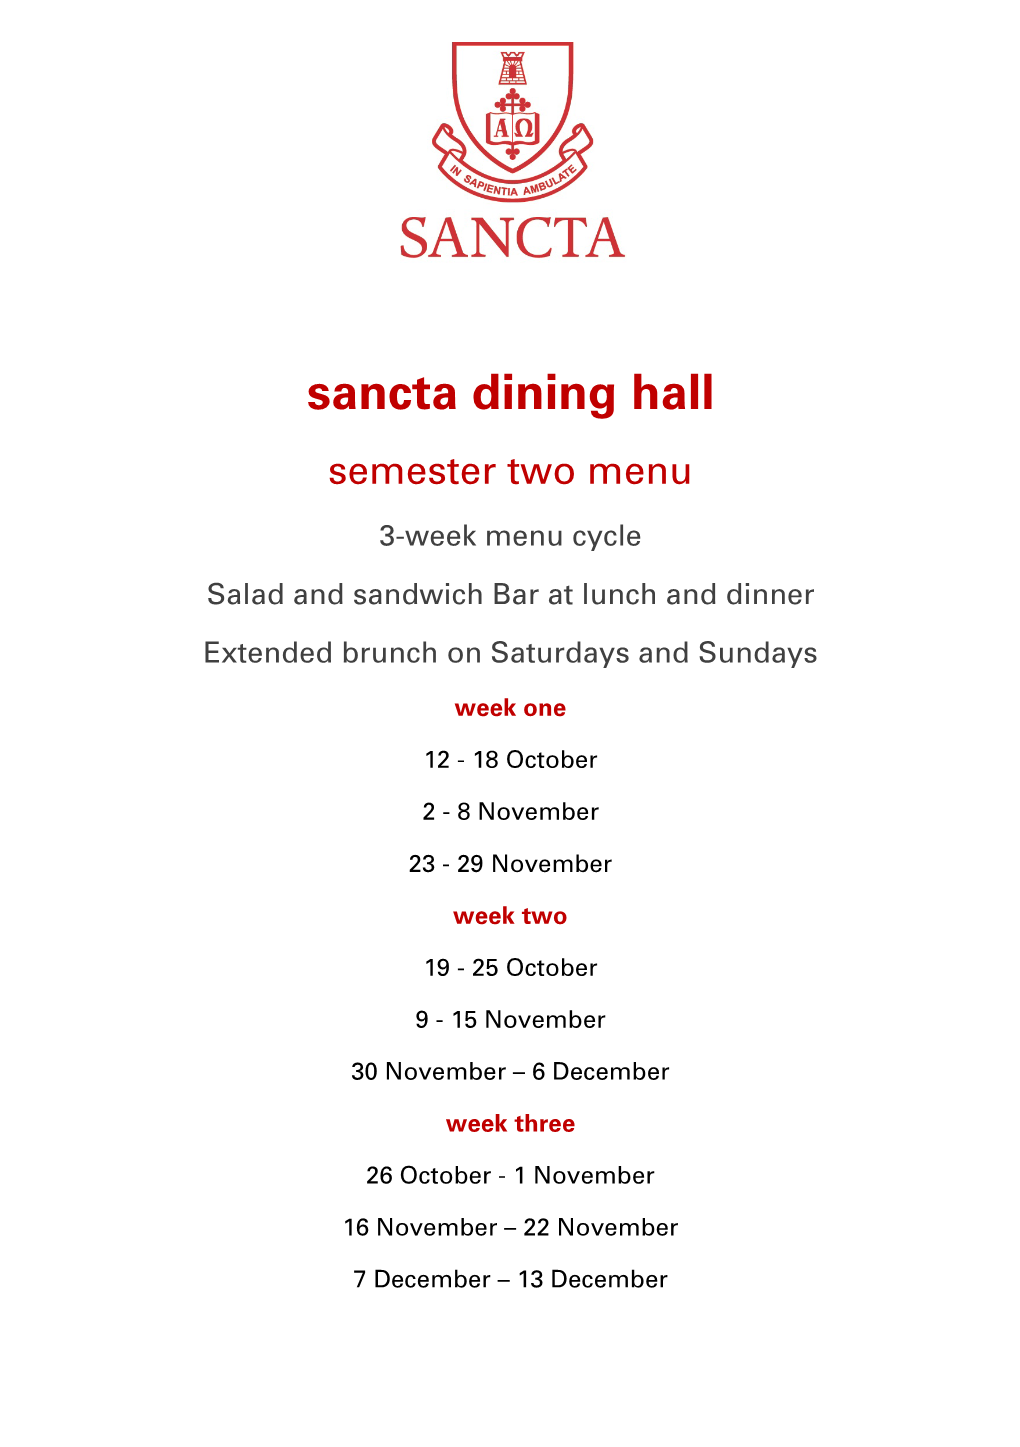 Sancta Dining Hall Semester Two Menu